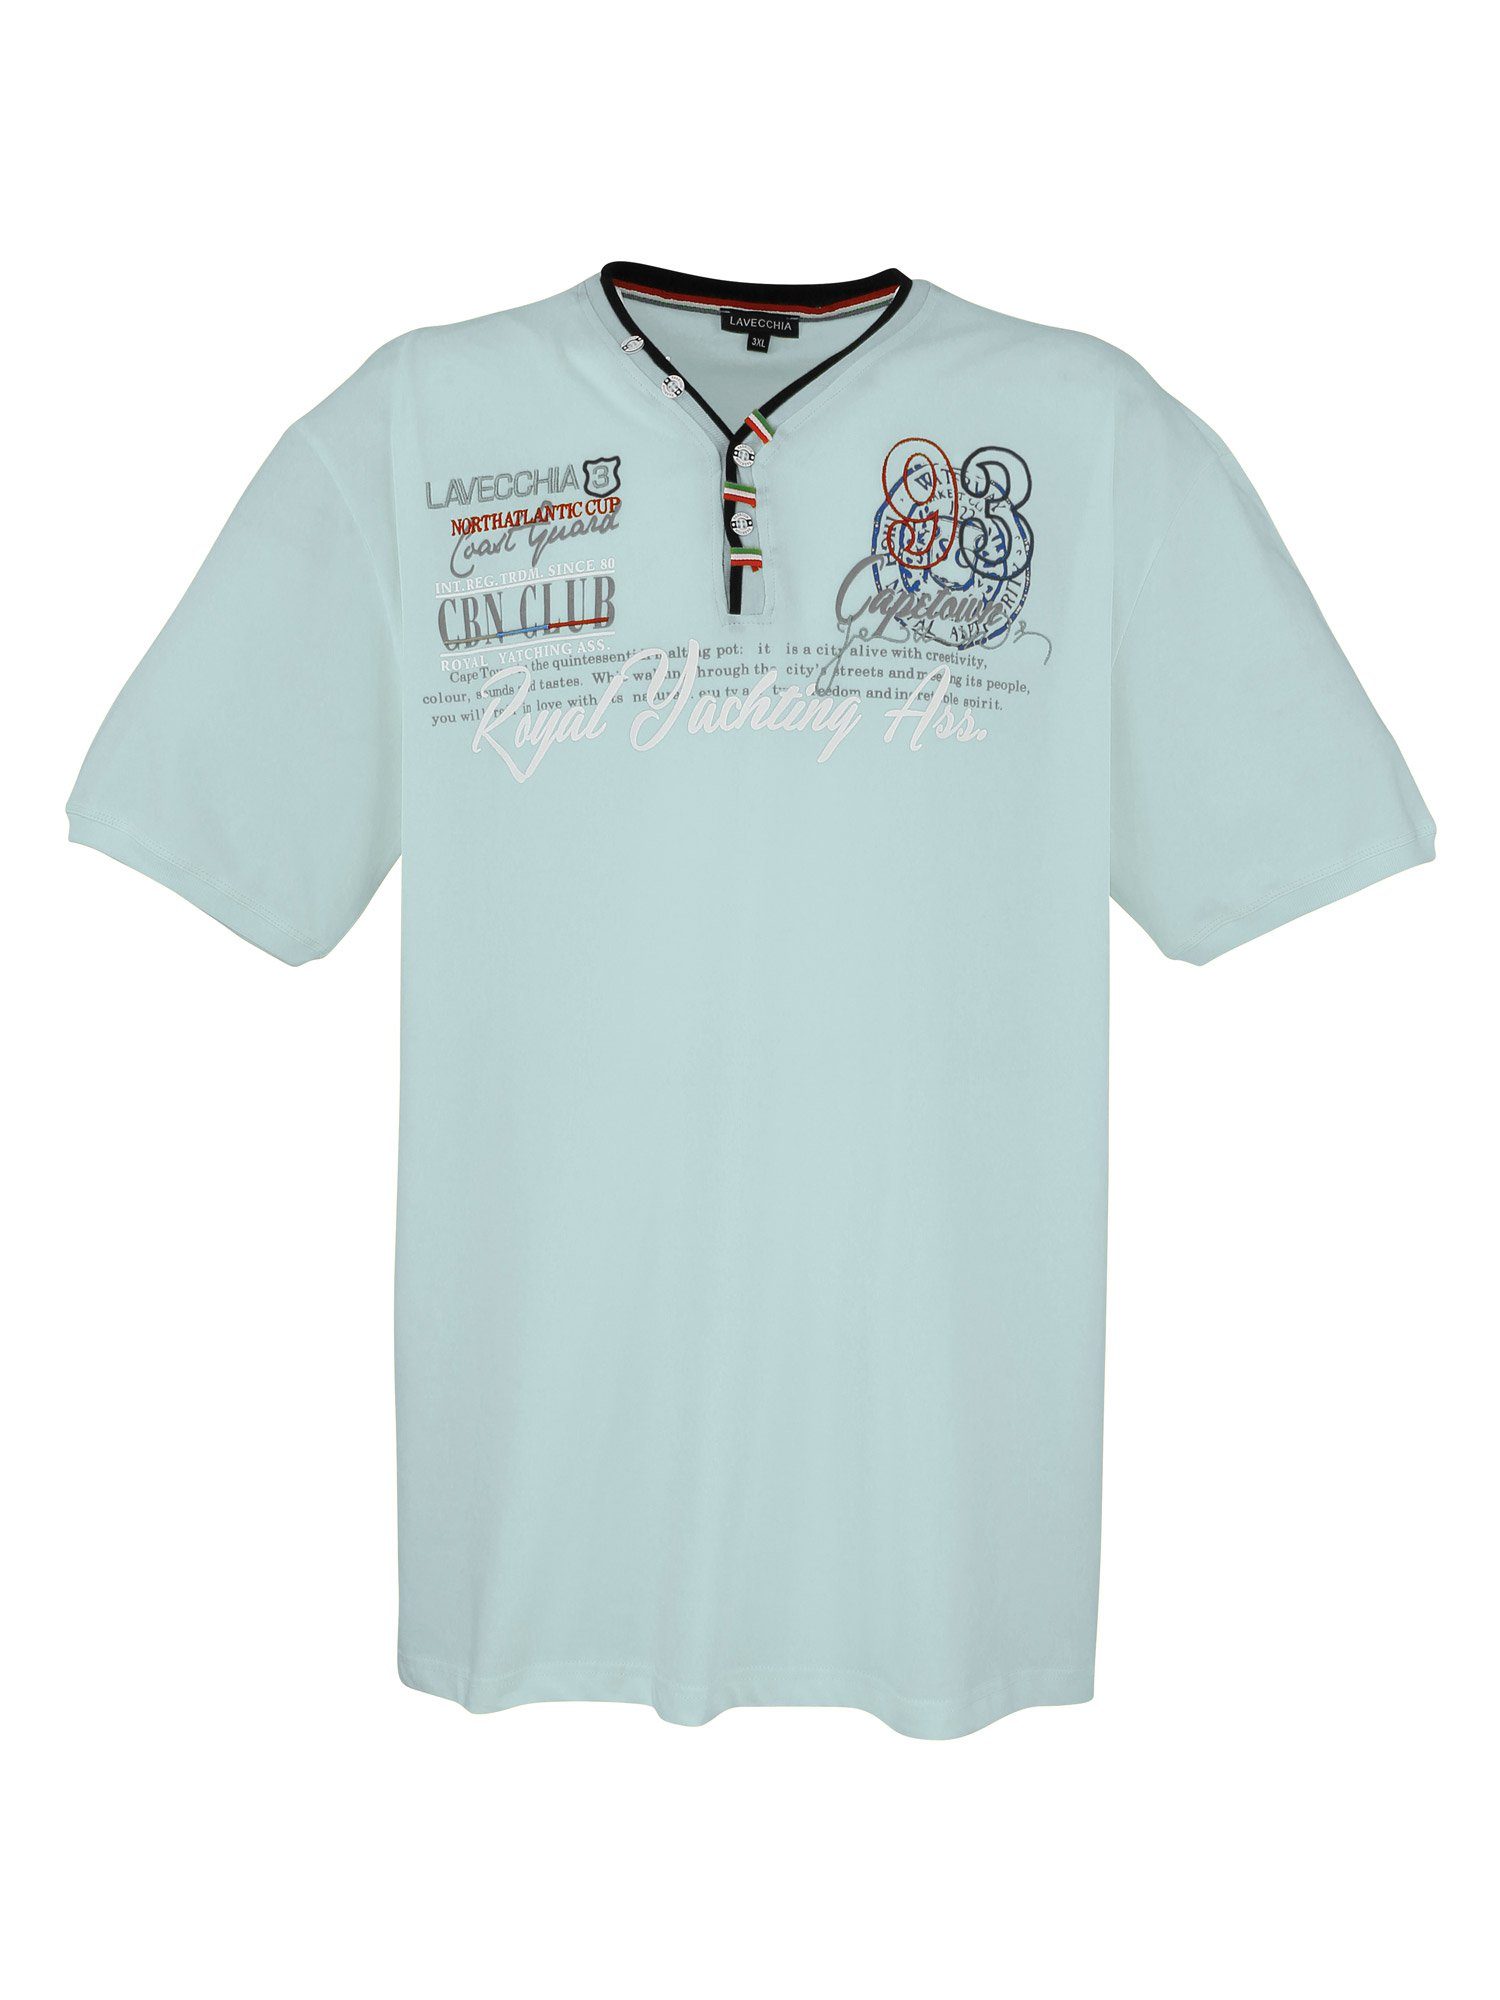 Lavecchia T-Shirt Übergrößen Herren V-Shirt LV-608 Herrenshirt V-Ausschnitt mint